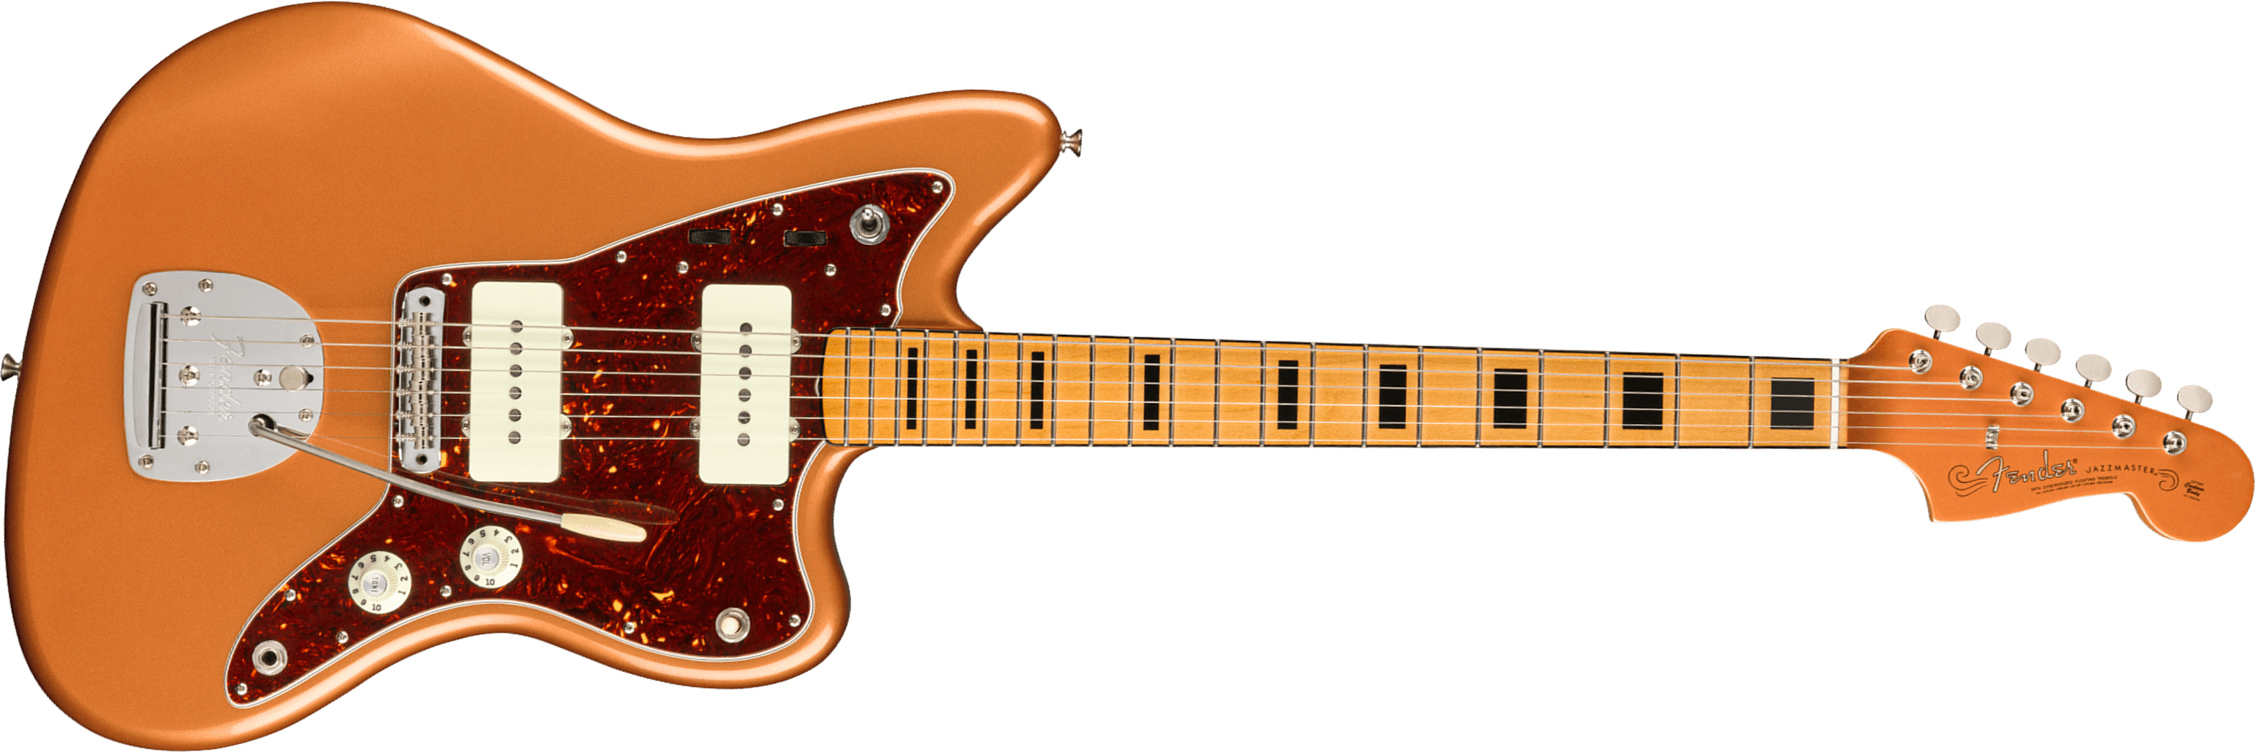 Fender Troy Van Leeuwen Jazzmaster Signature Mex Mn - Copper Age - Retro rock electric guitar - Main picture